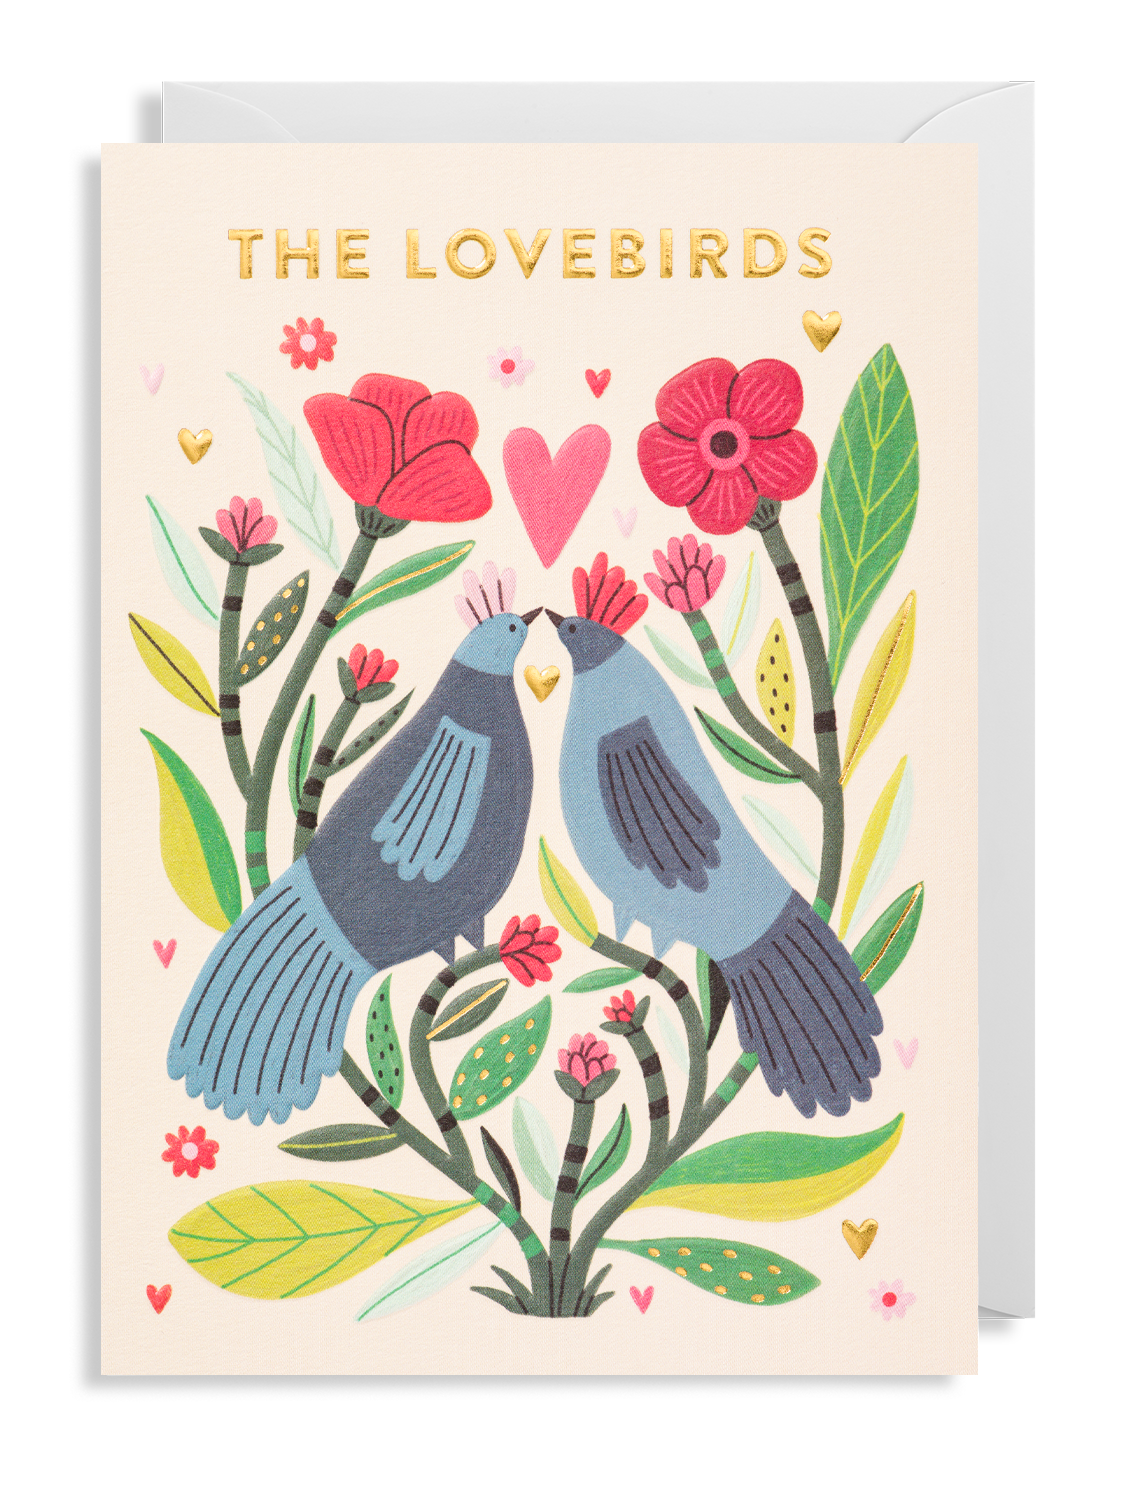 The Lovebirds Card